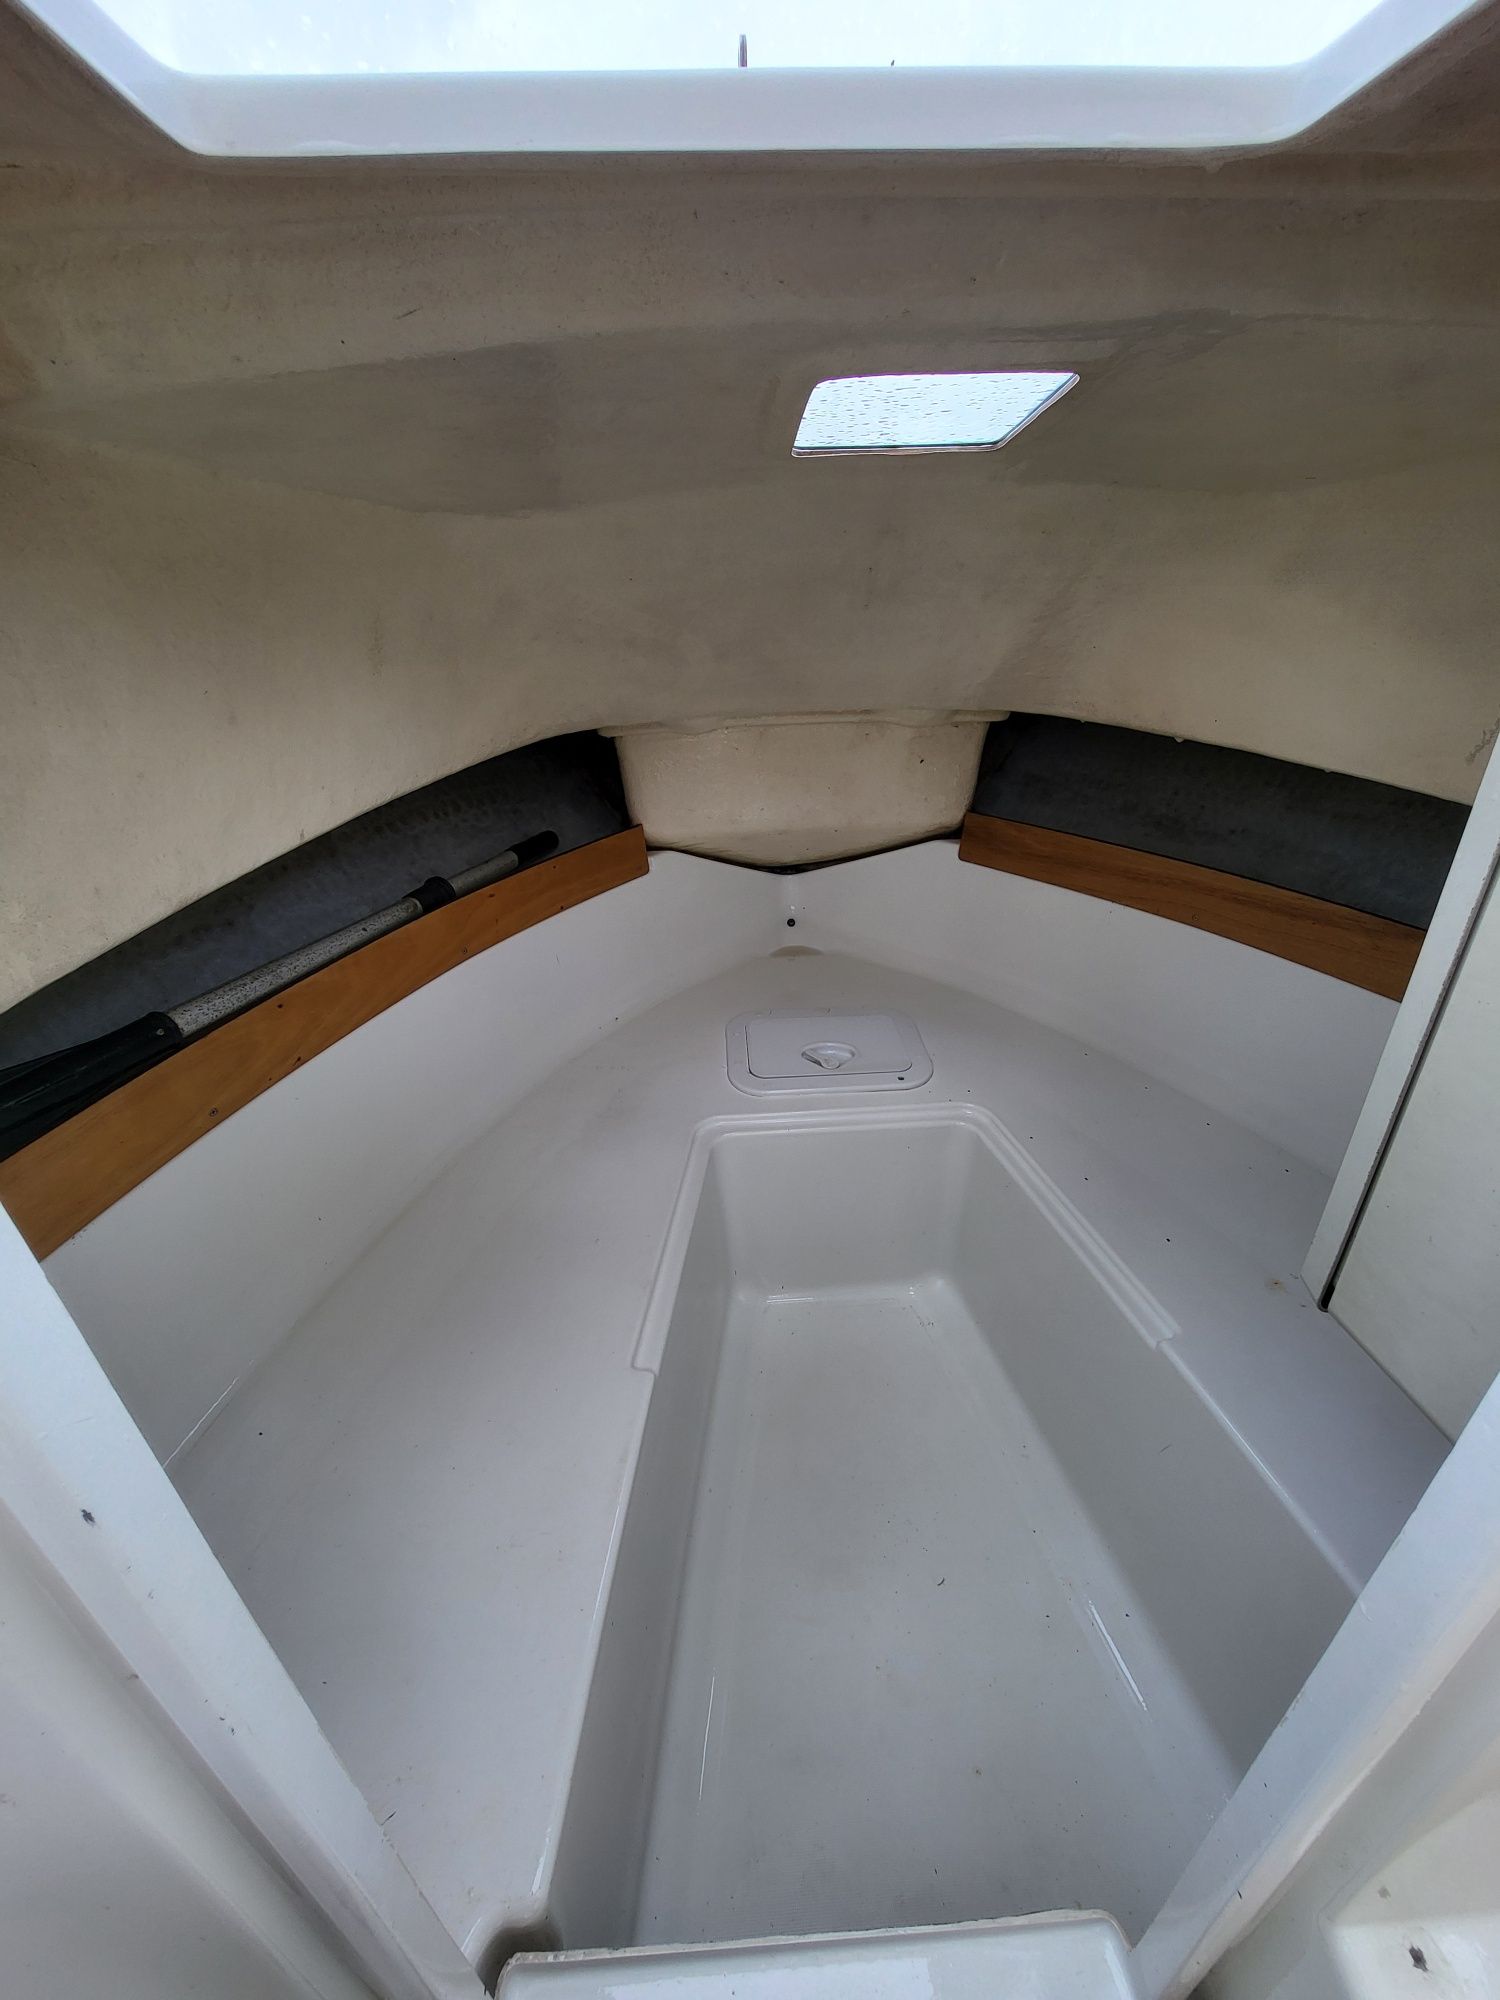 Lodz kabinowa Pilothouse Antares 500 lodka 5m